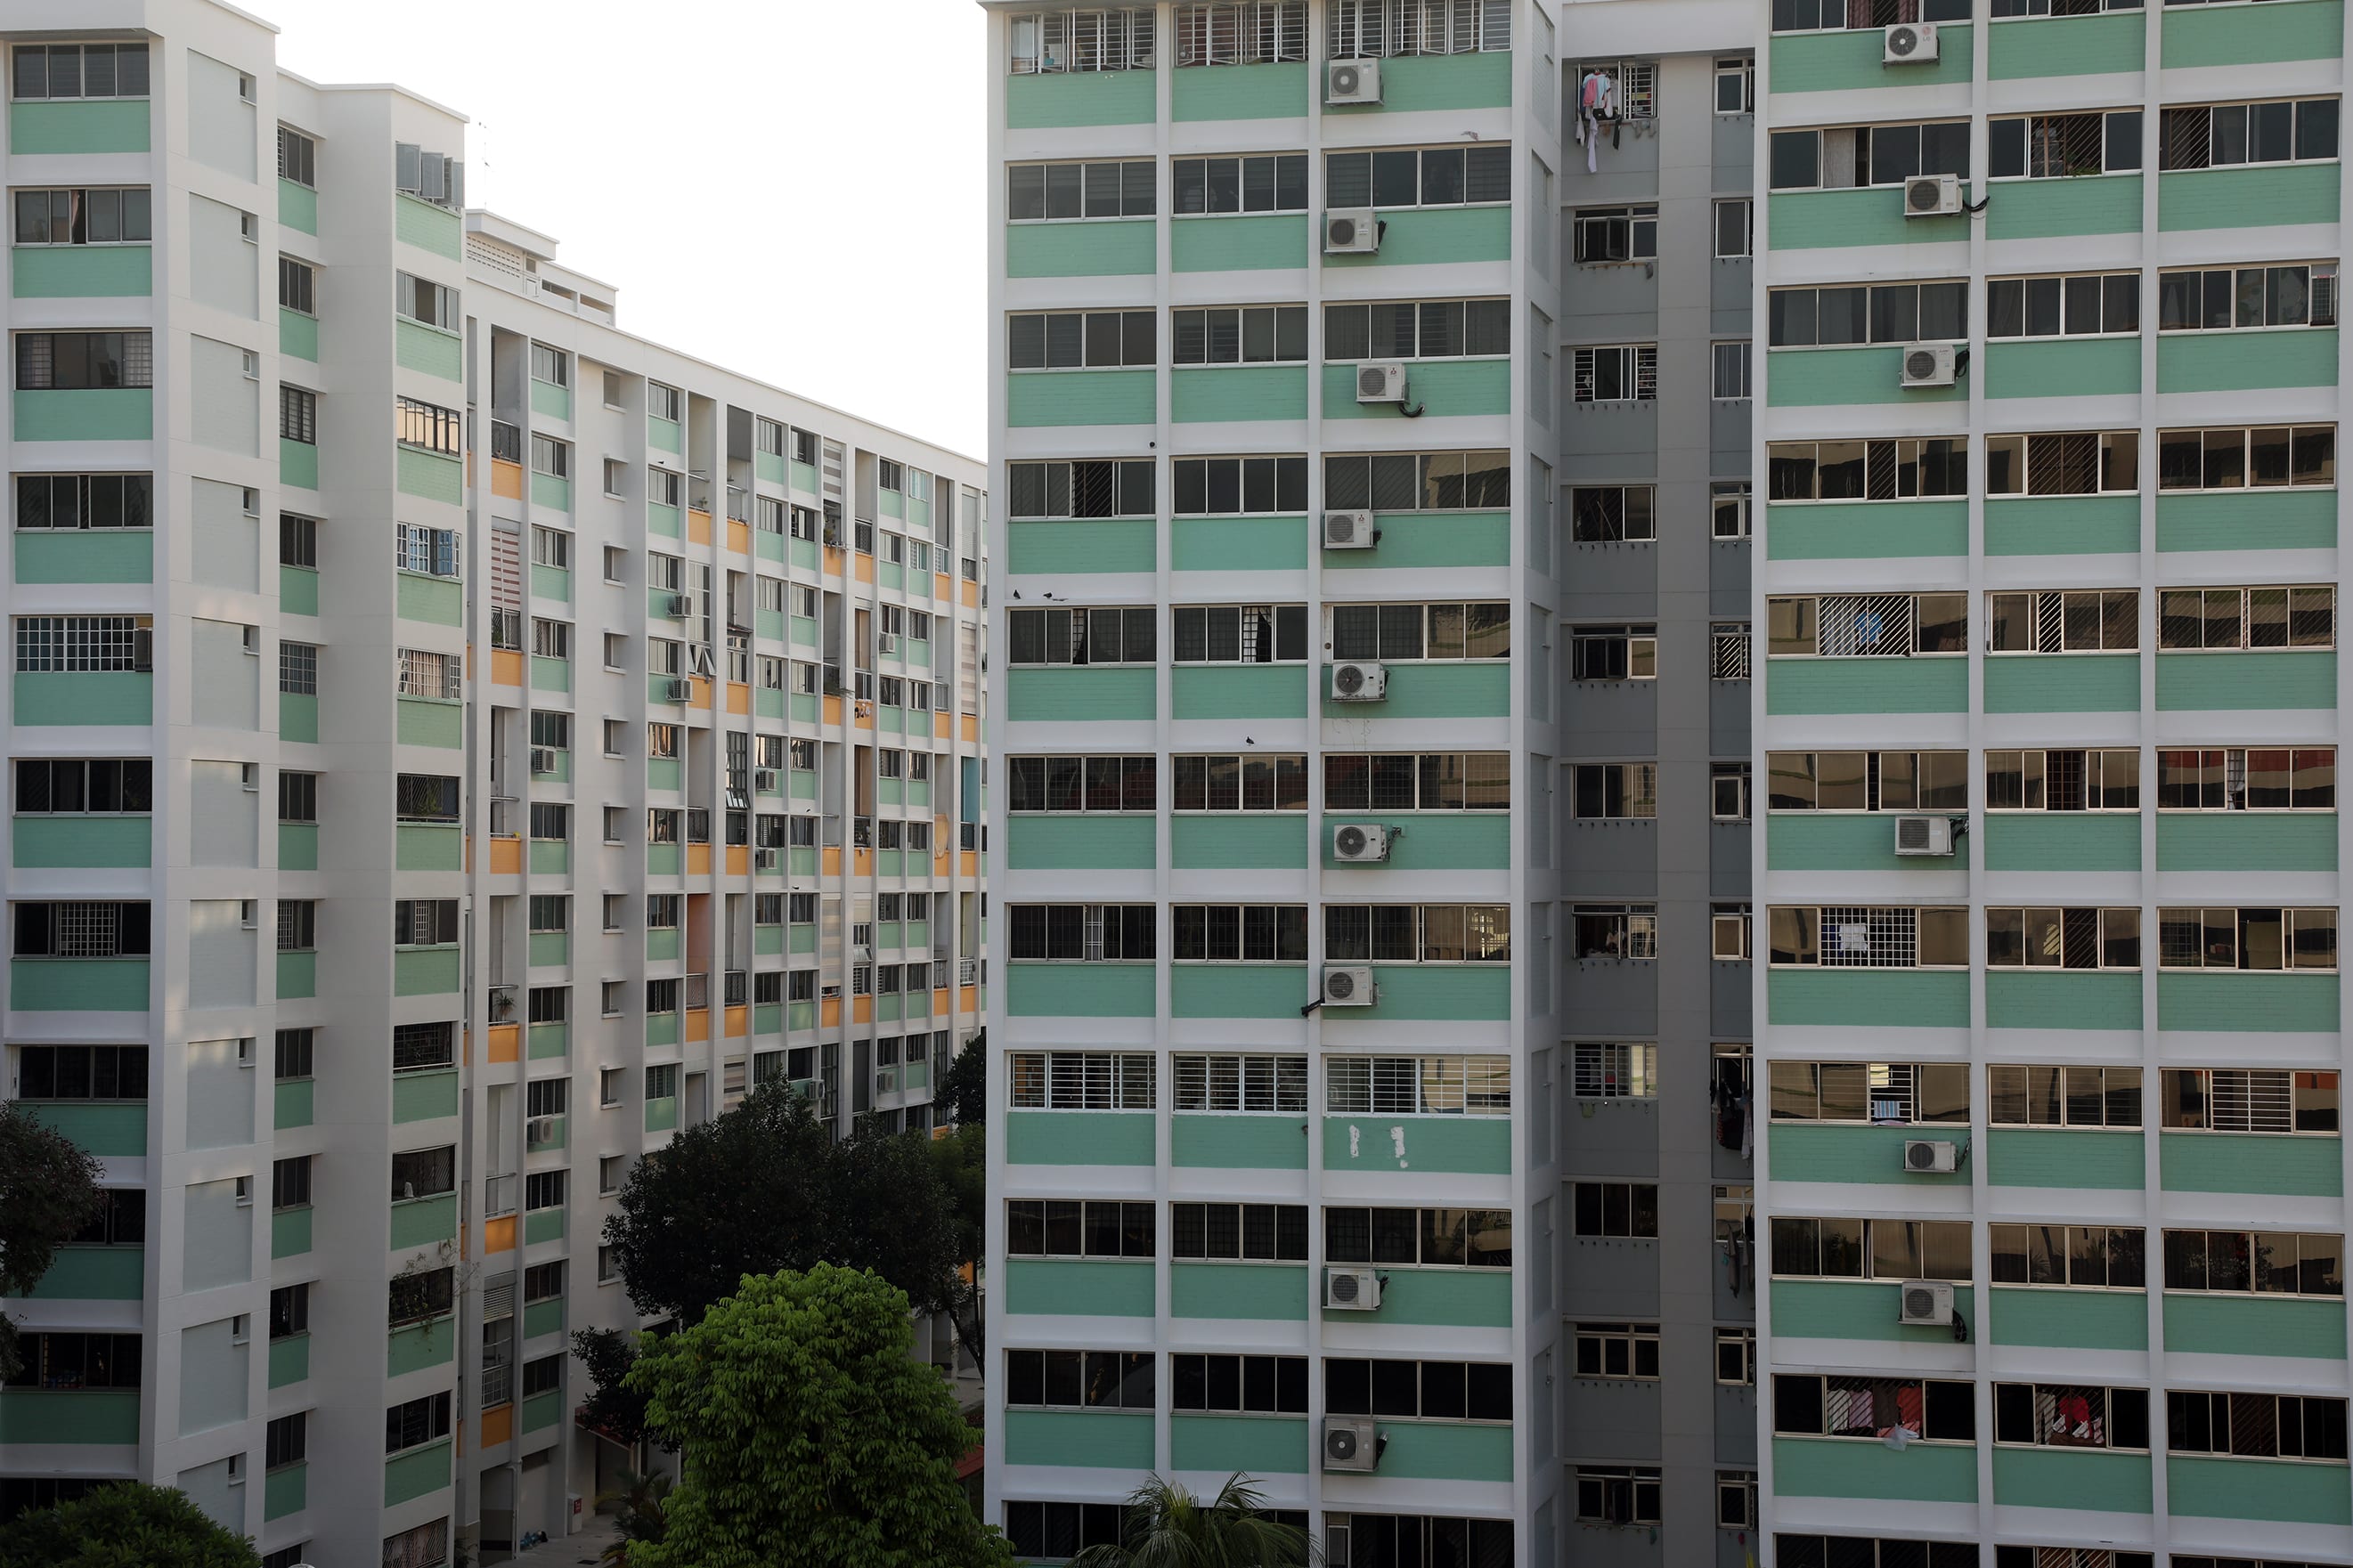 Resale levy ensures a fair allocation of public housing subsidies, says HDB